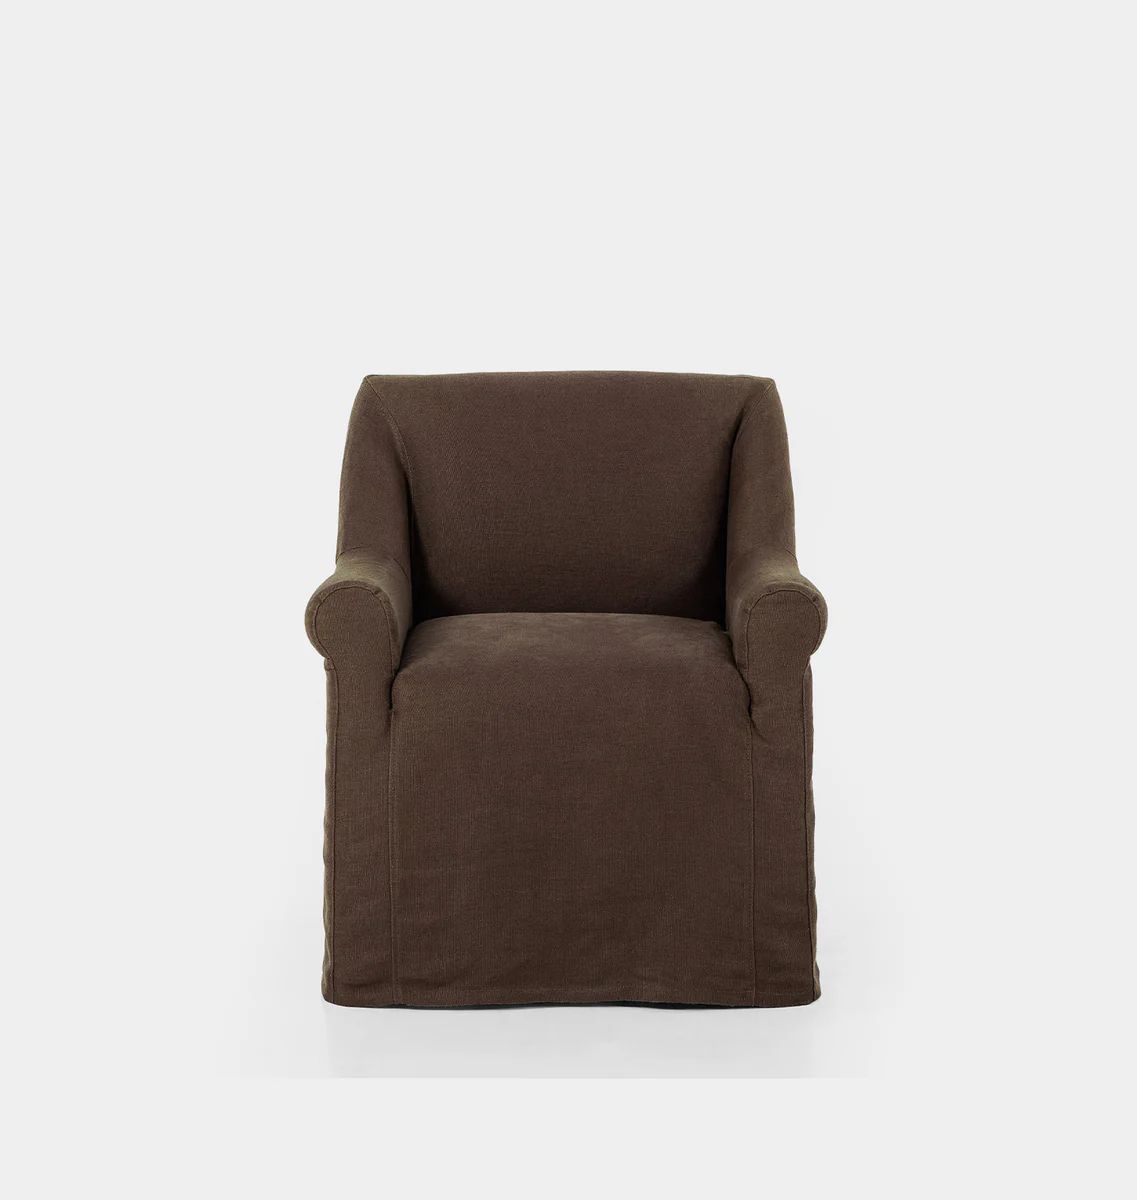 Seahurst Slipcovered Dining Chair | Amber Interiors